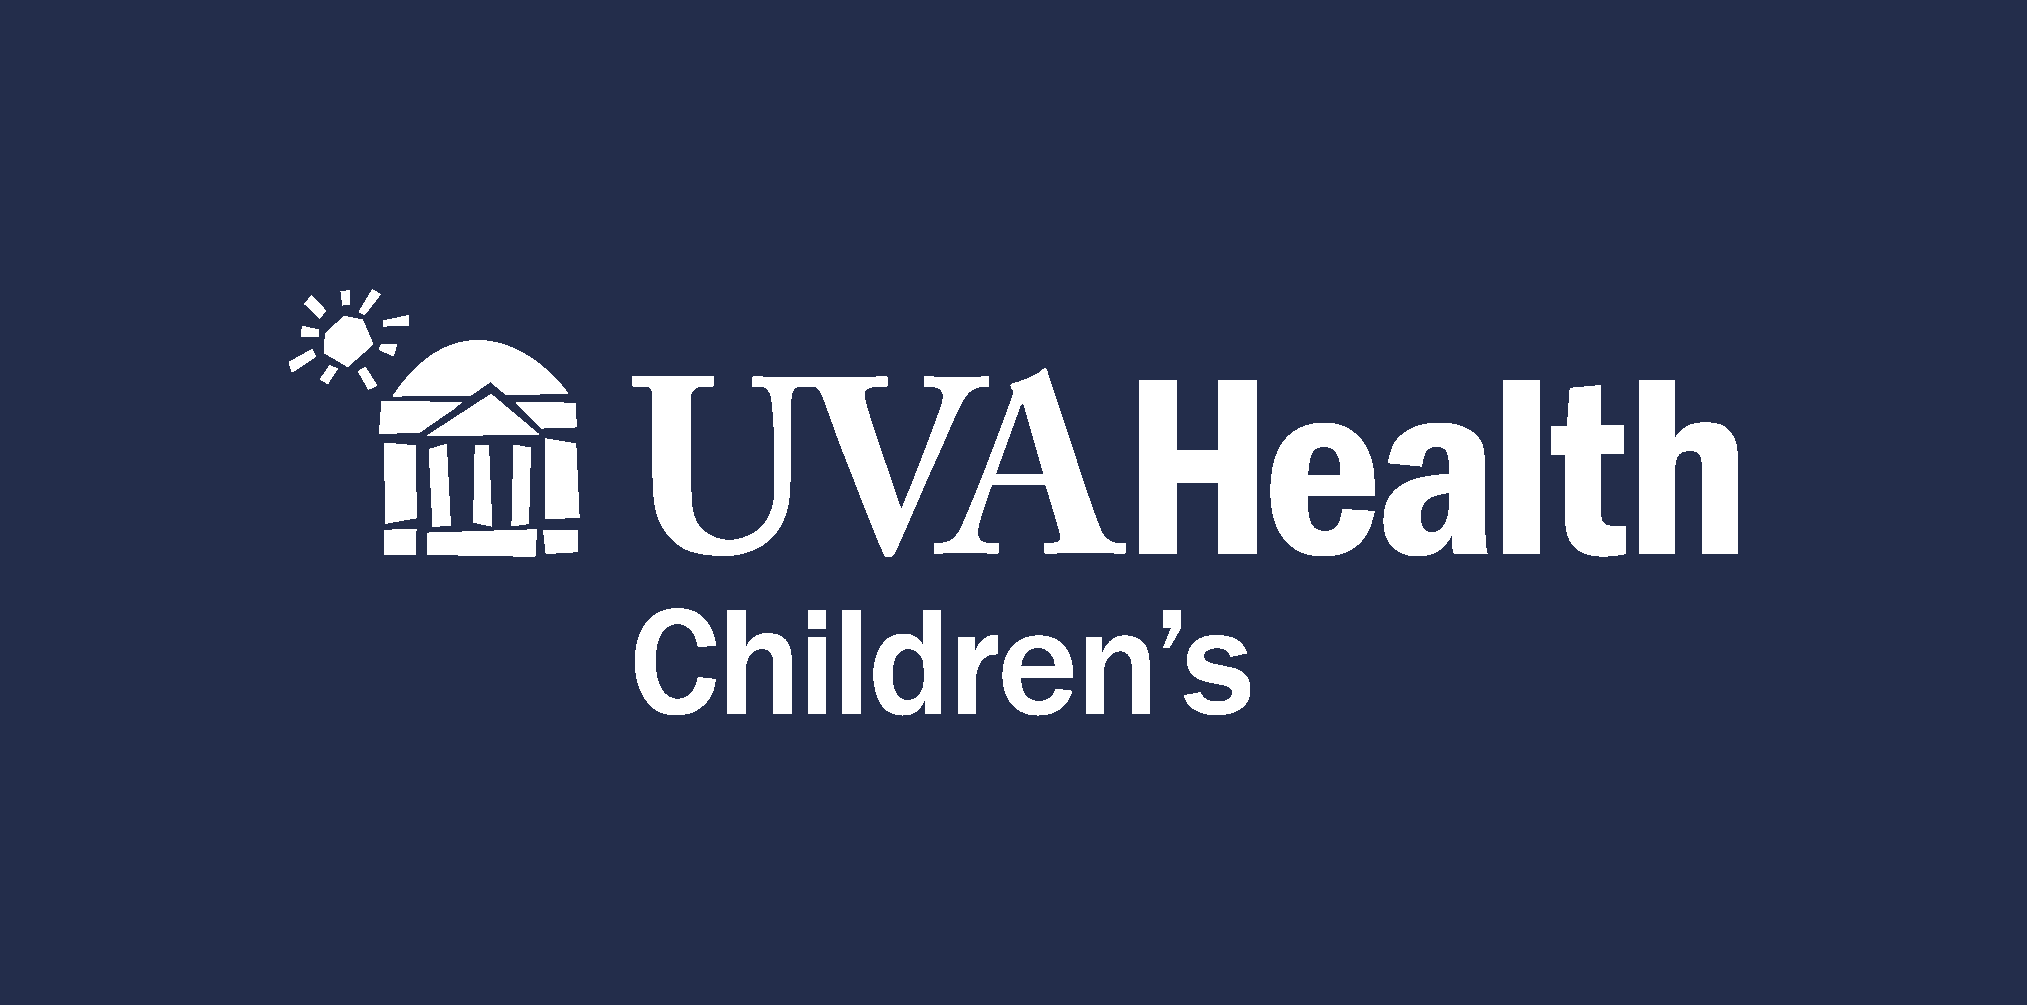 UVA Health Children's knockout logo in blue